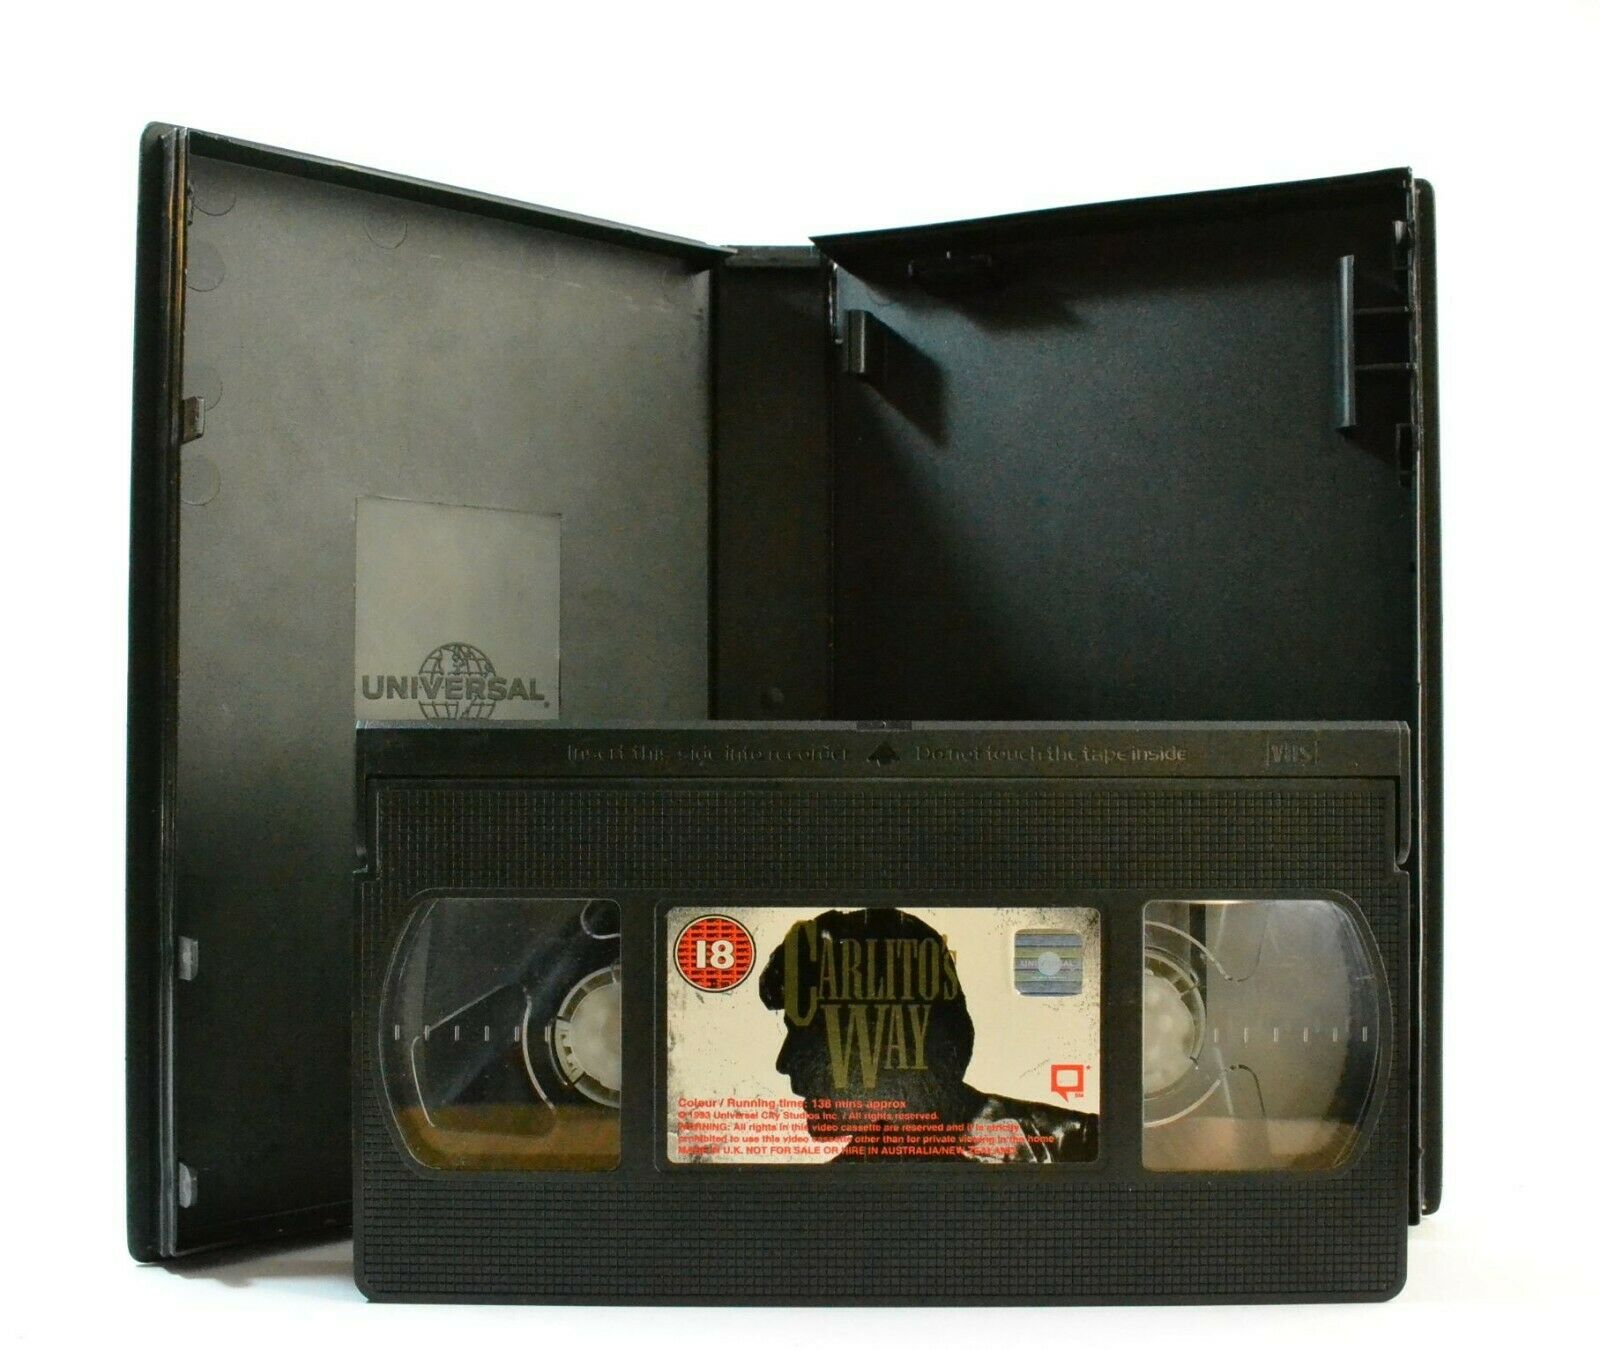 Carlito's Way: B.De Palma Film - Large Box - Drama - A.Pacino/S.Penn - Pal VHS-